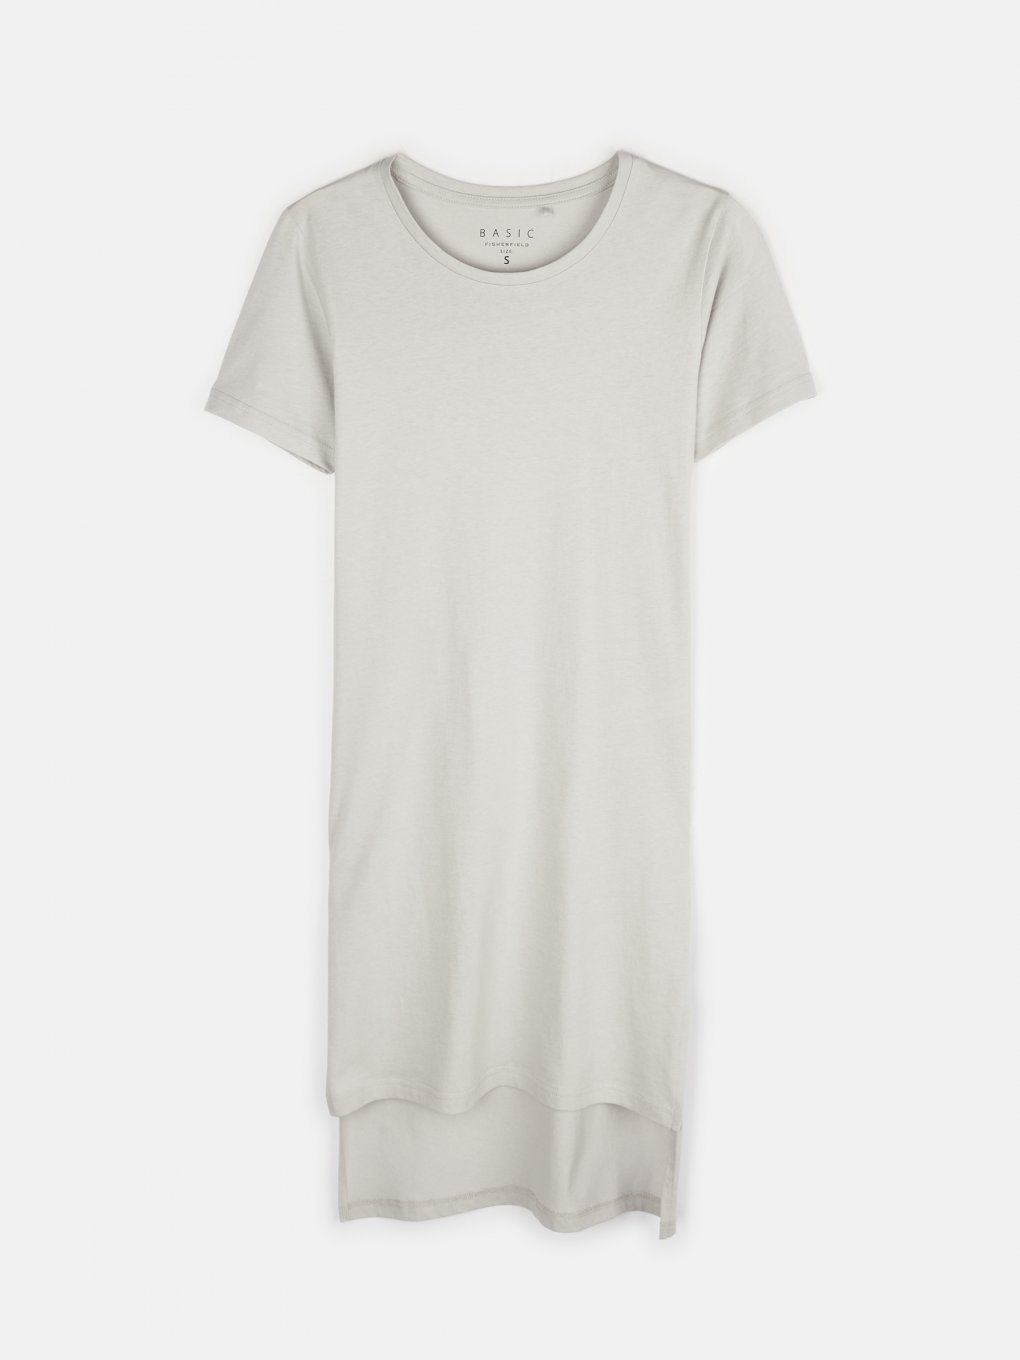 Basic longline cotton t-shirt with side slits